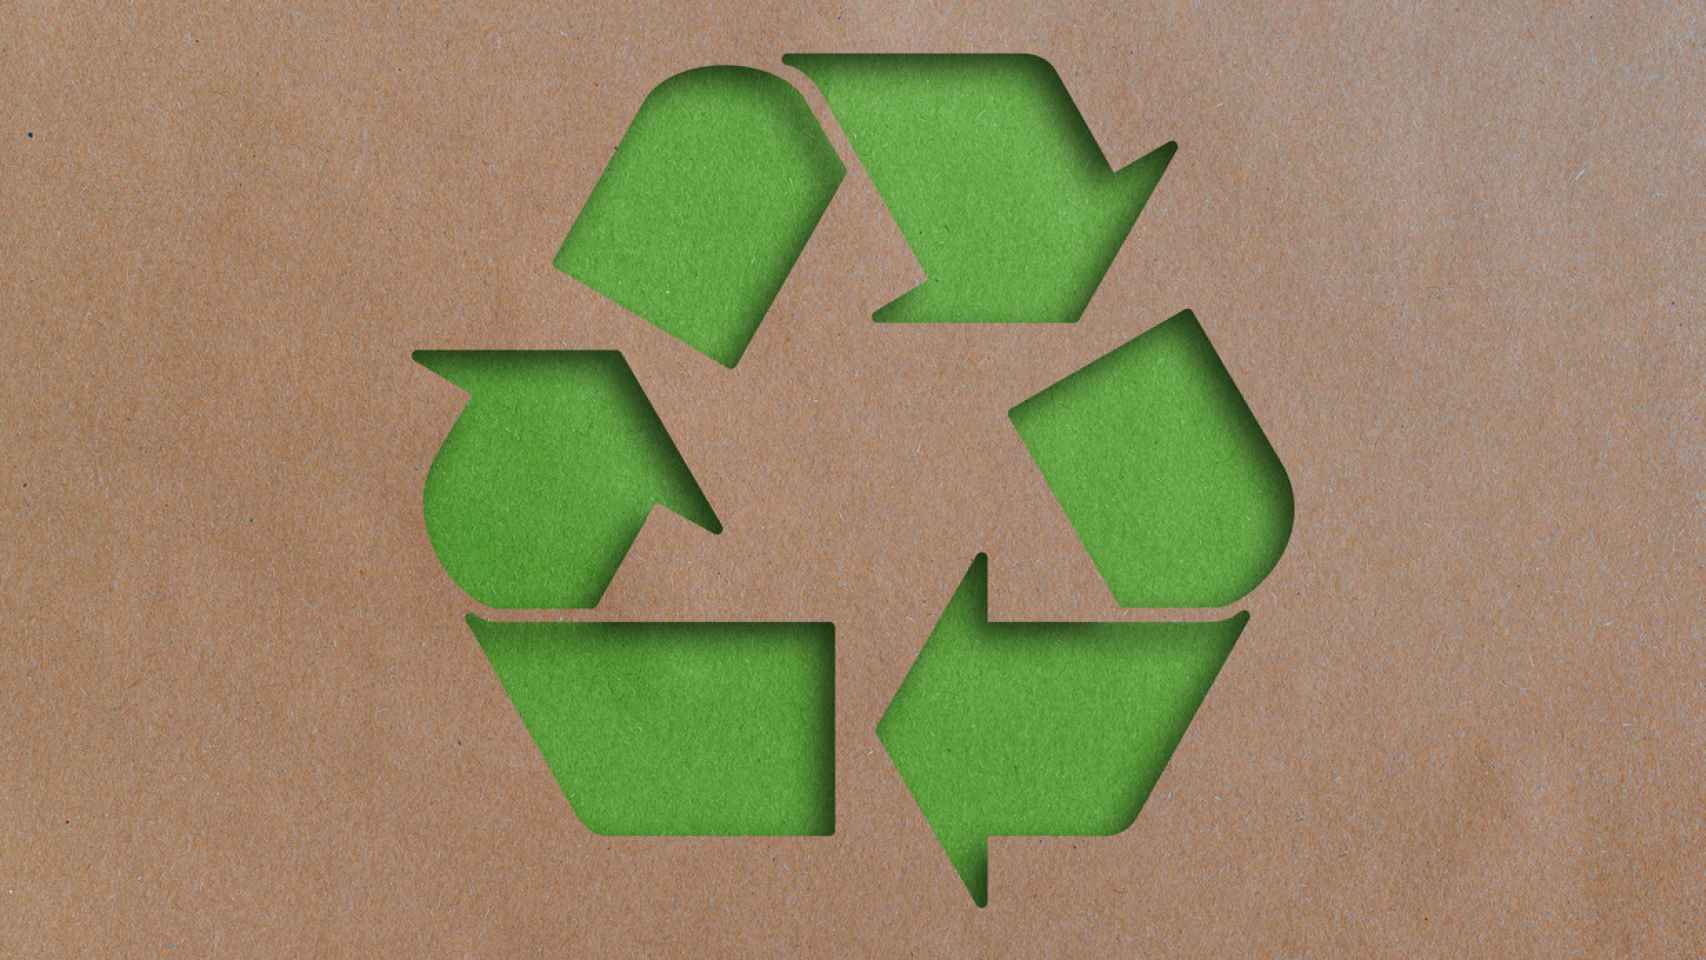 Símbolo del reciclaje.